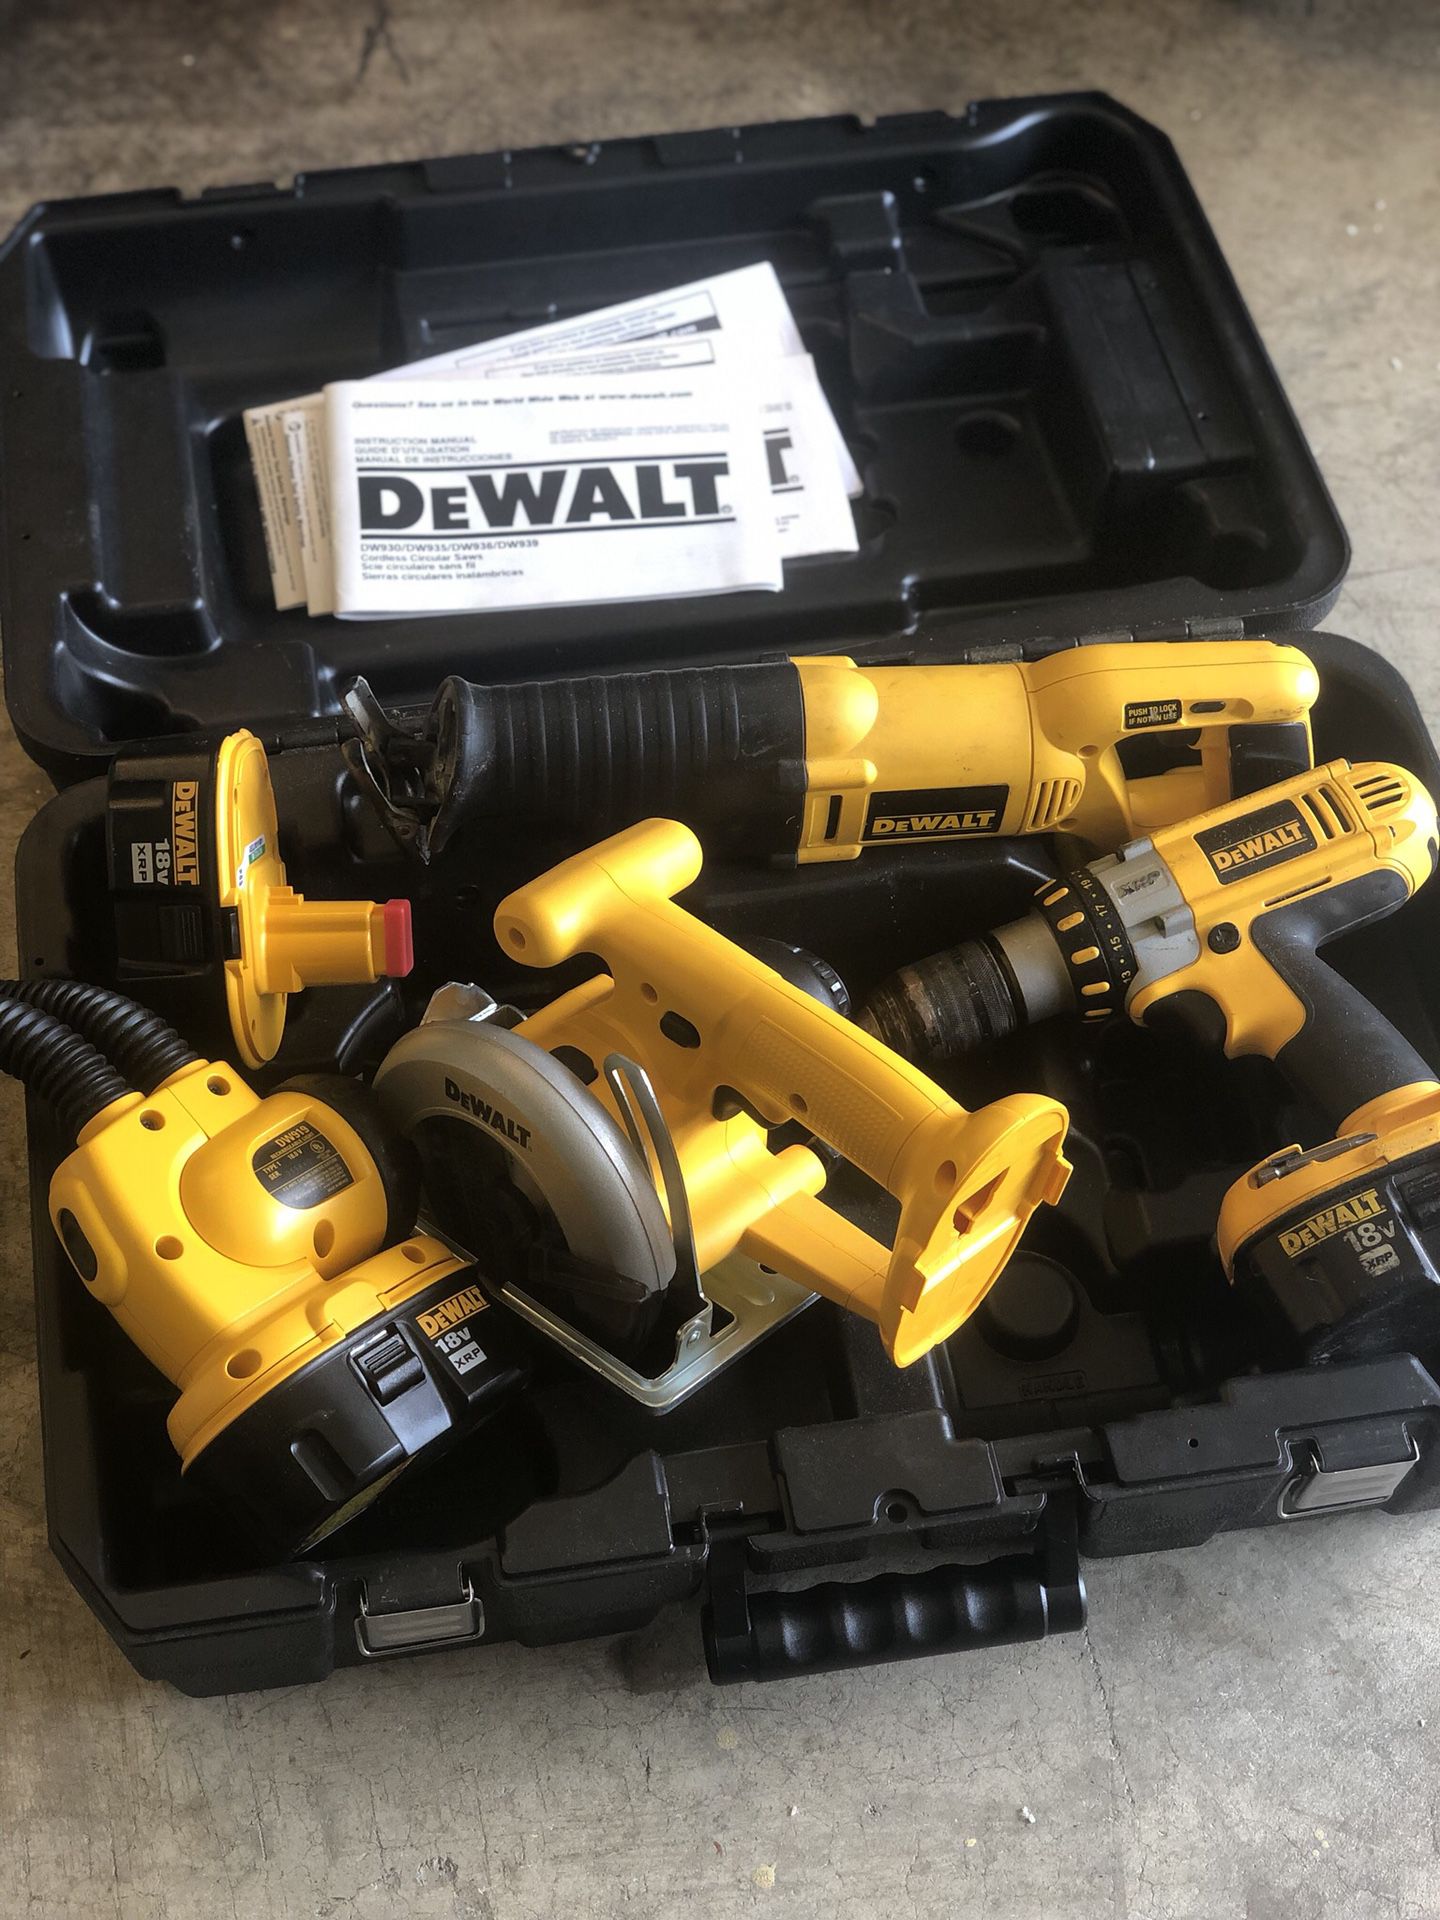 DeWalt cordless power tool set